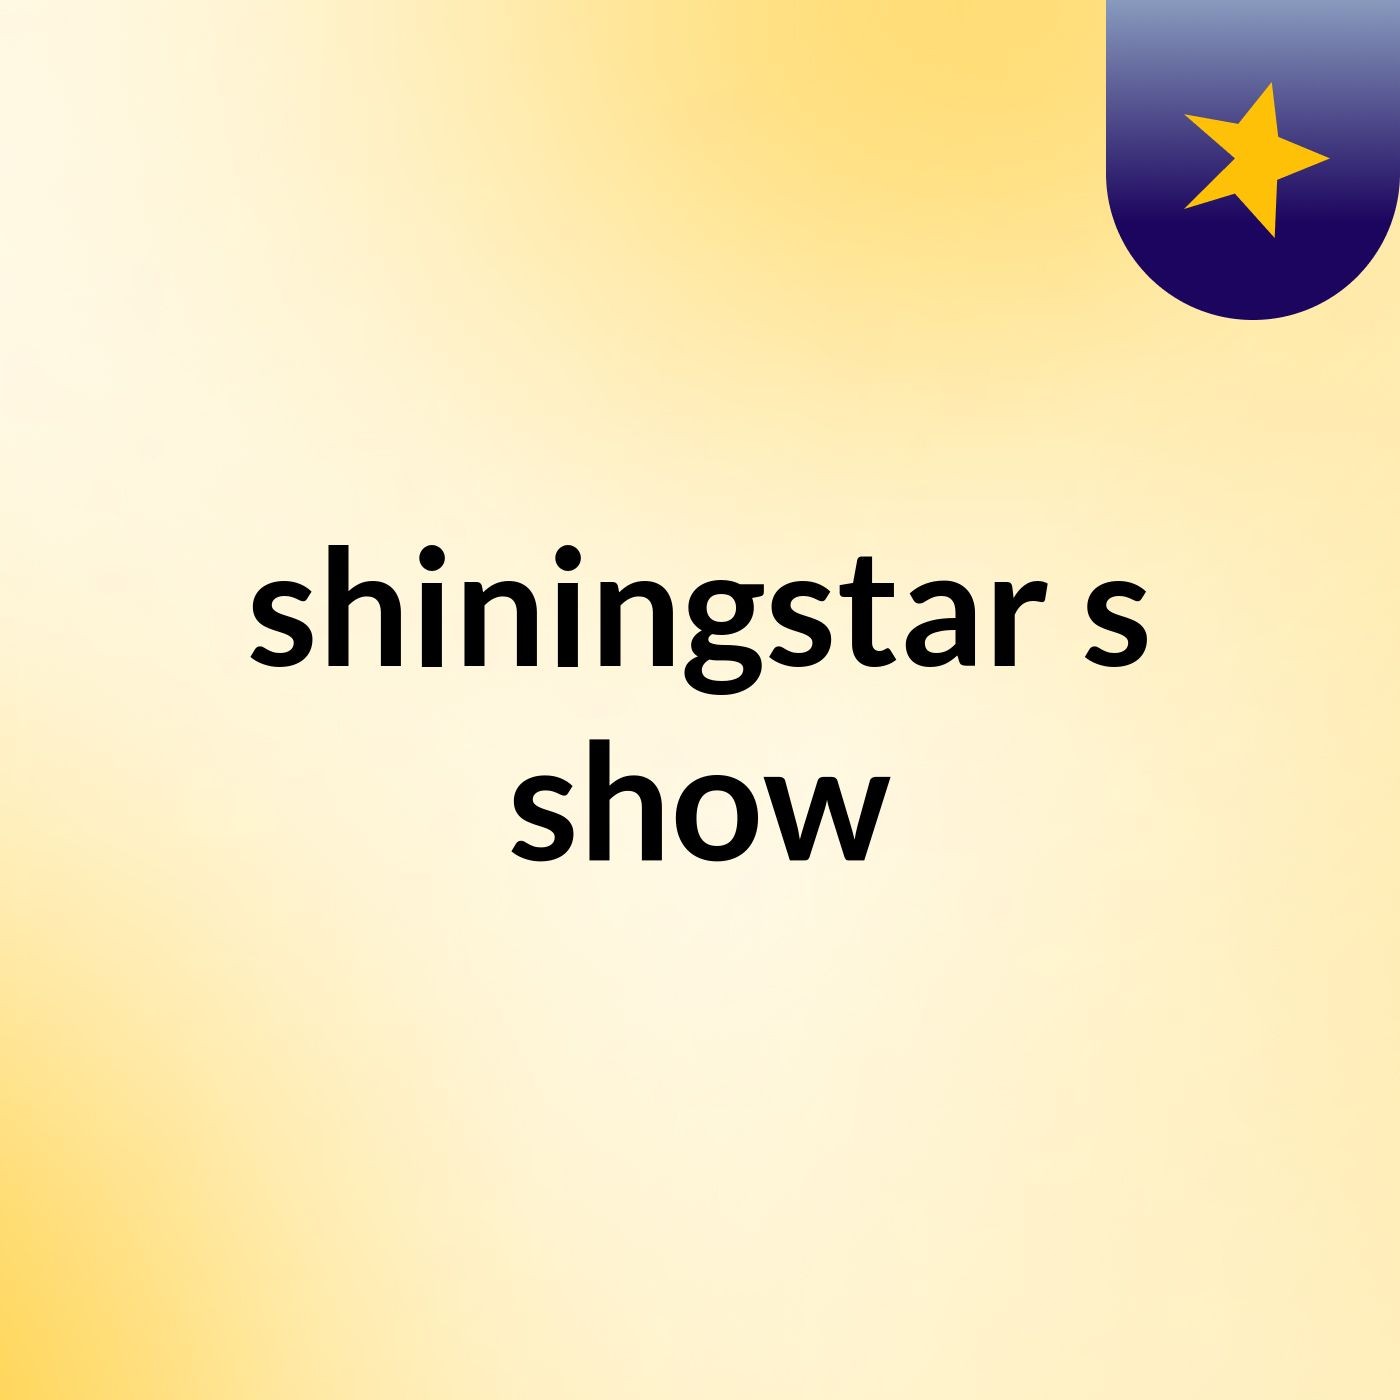 shiningstar's show